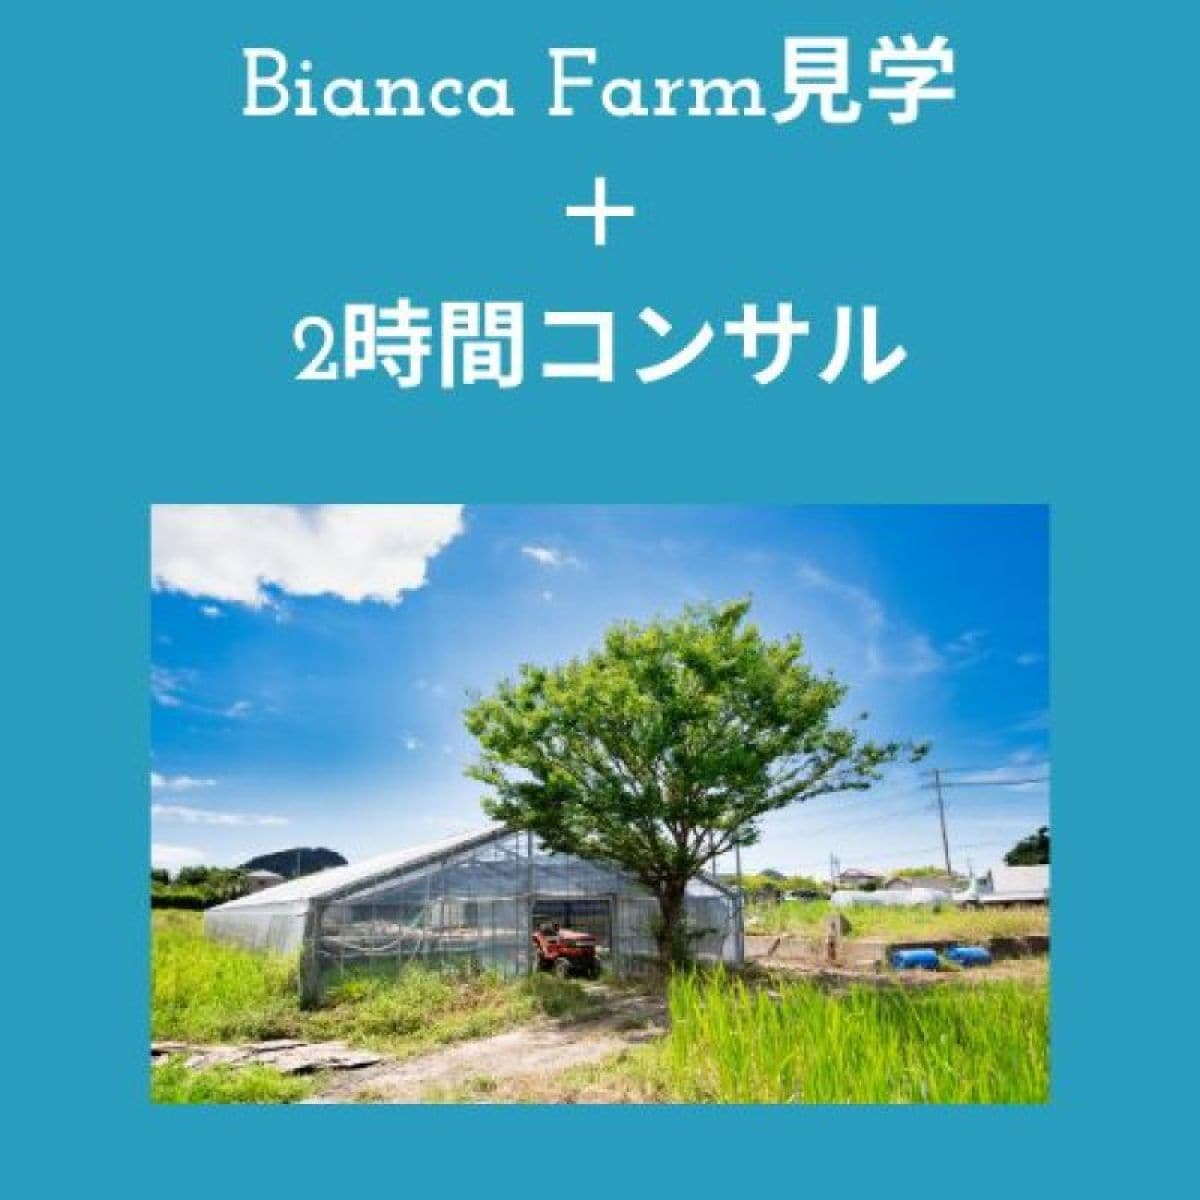 Bianca Farm見学　＋ 2時間　陸上養殖コンサルティング　Bianca Farm tour ＋ 2hour consulting about regarding land-based aquaculture  Japanese and English